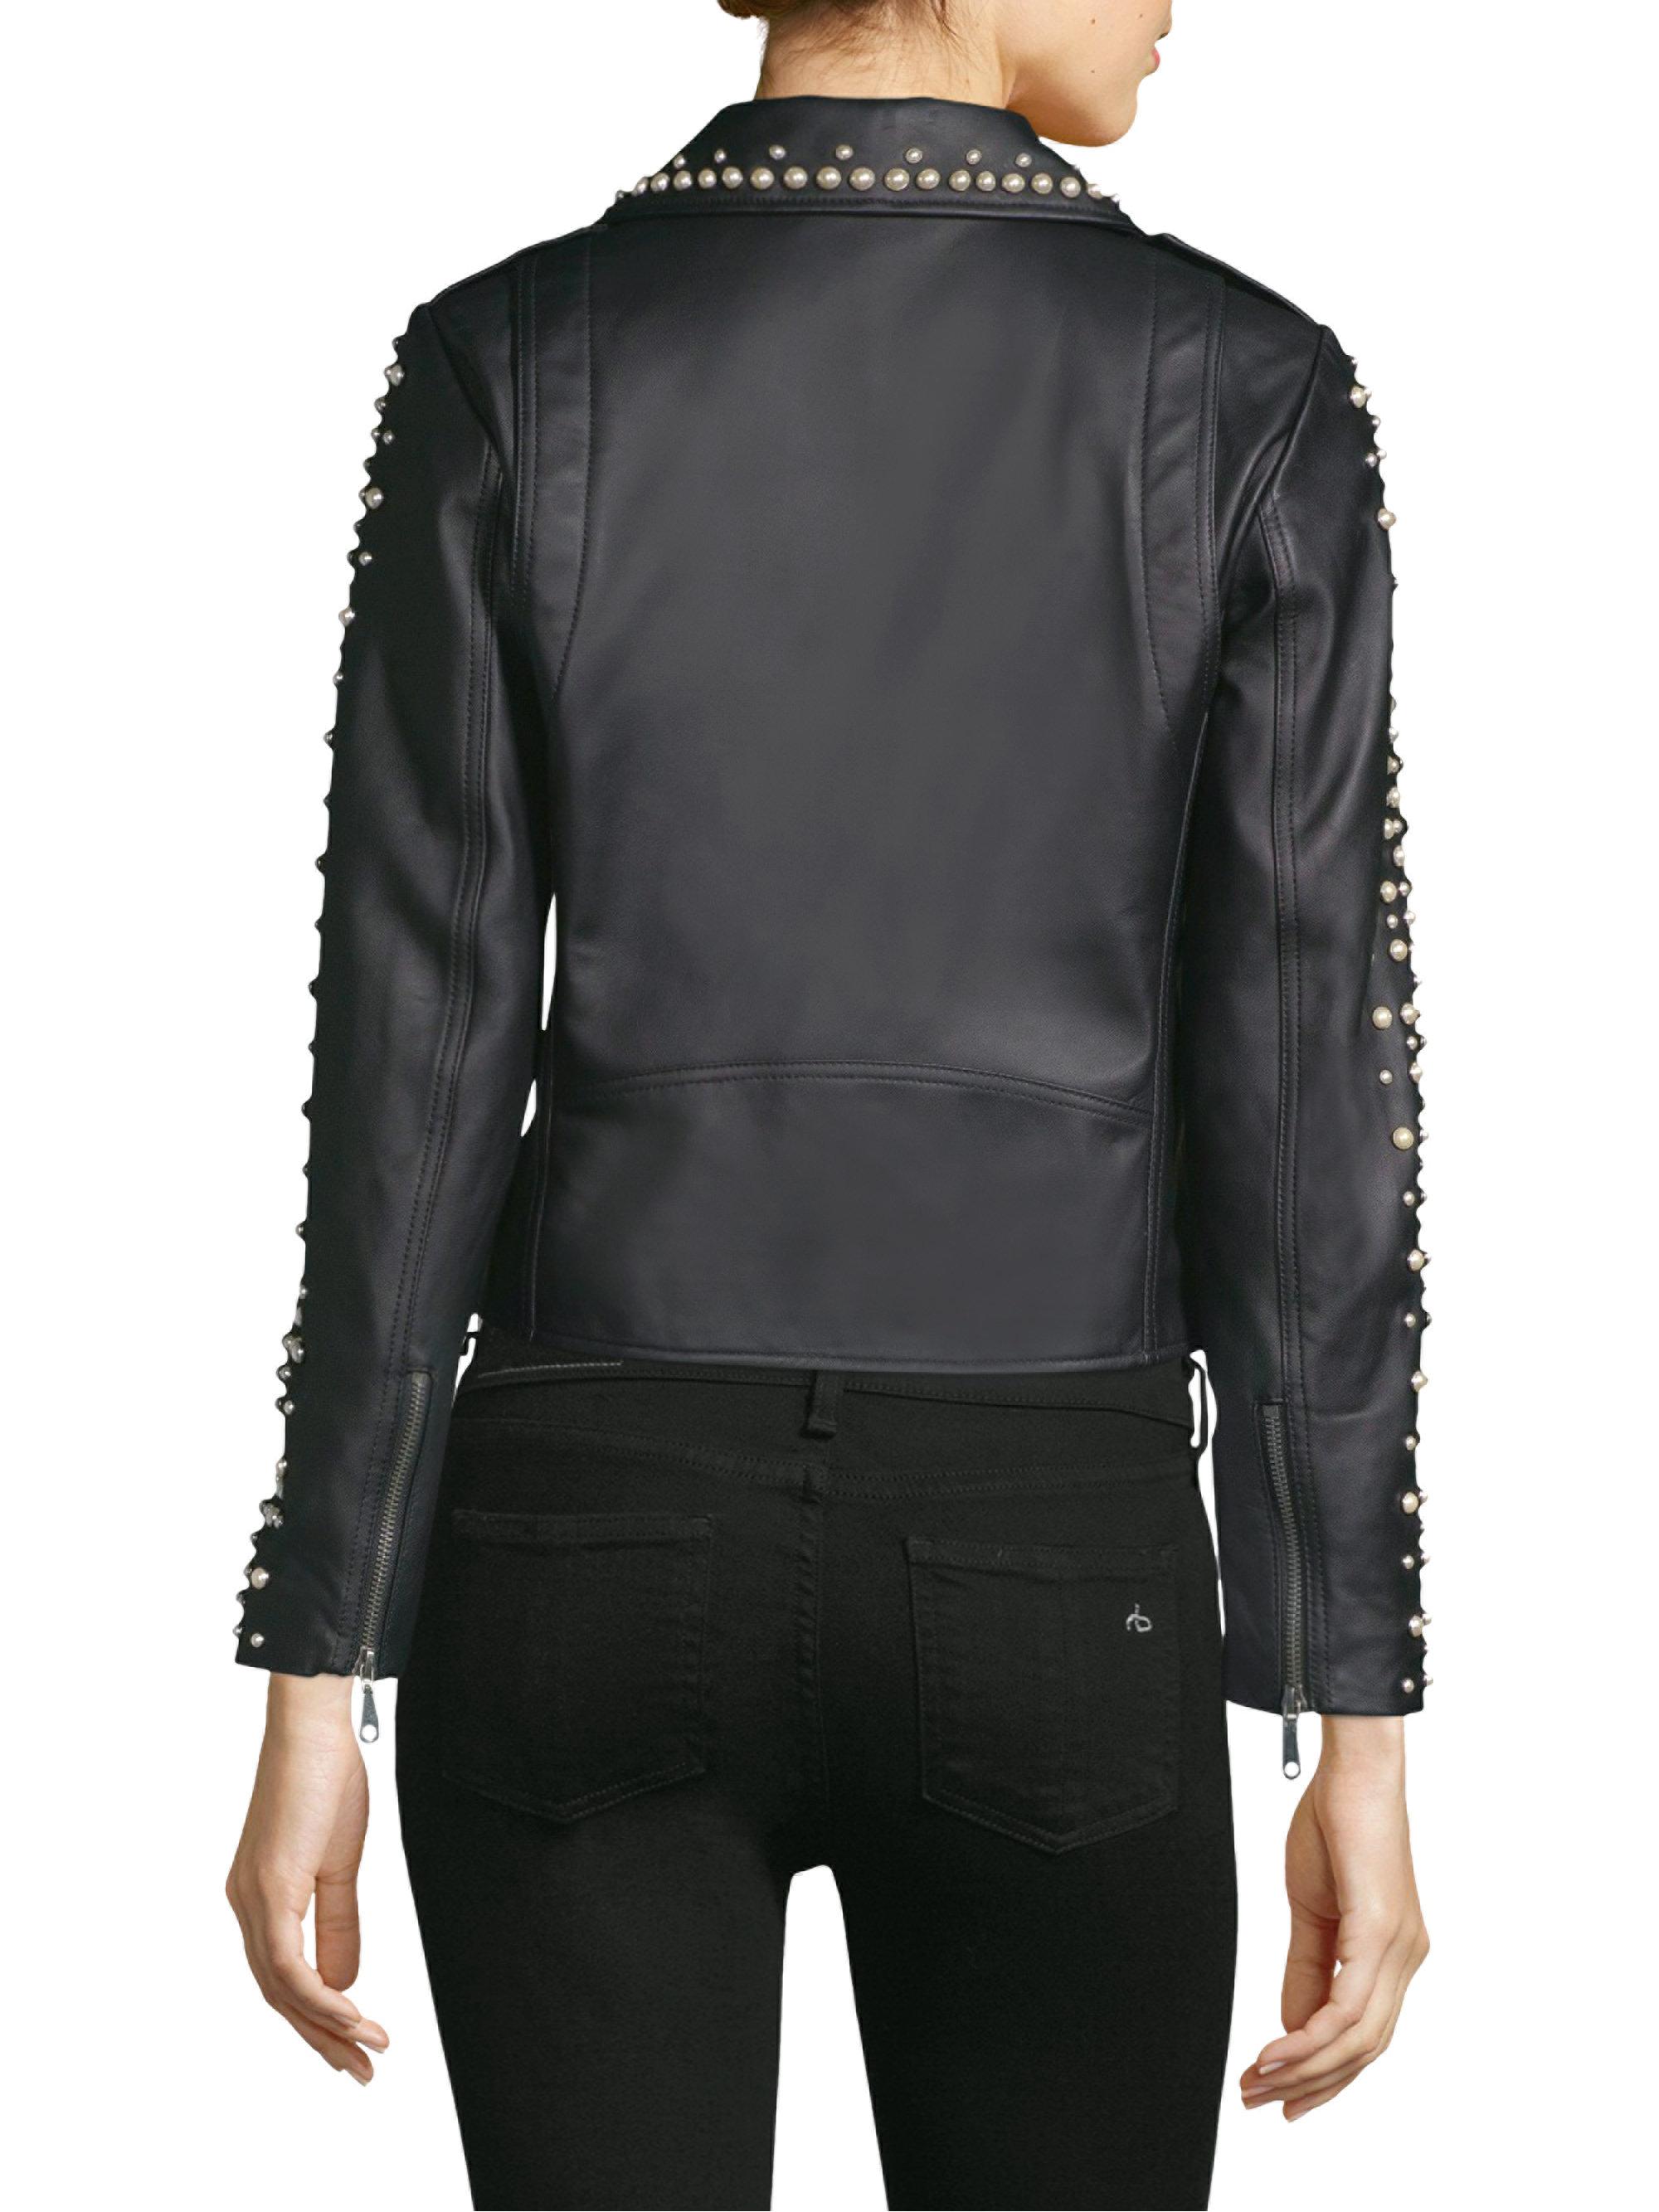 Rebecca Minkoff Wes Pearl Moto Jacket in Black - Lyst